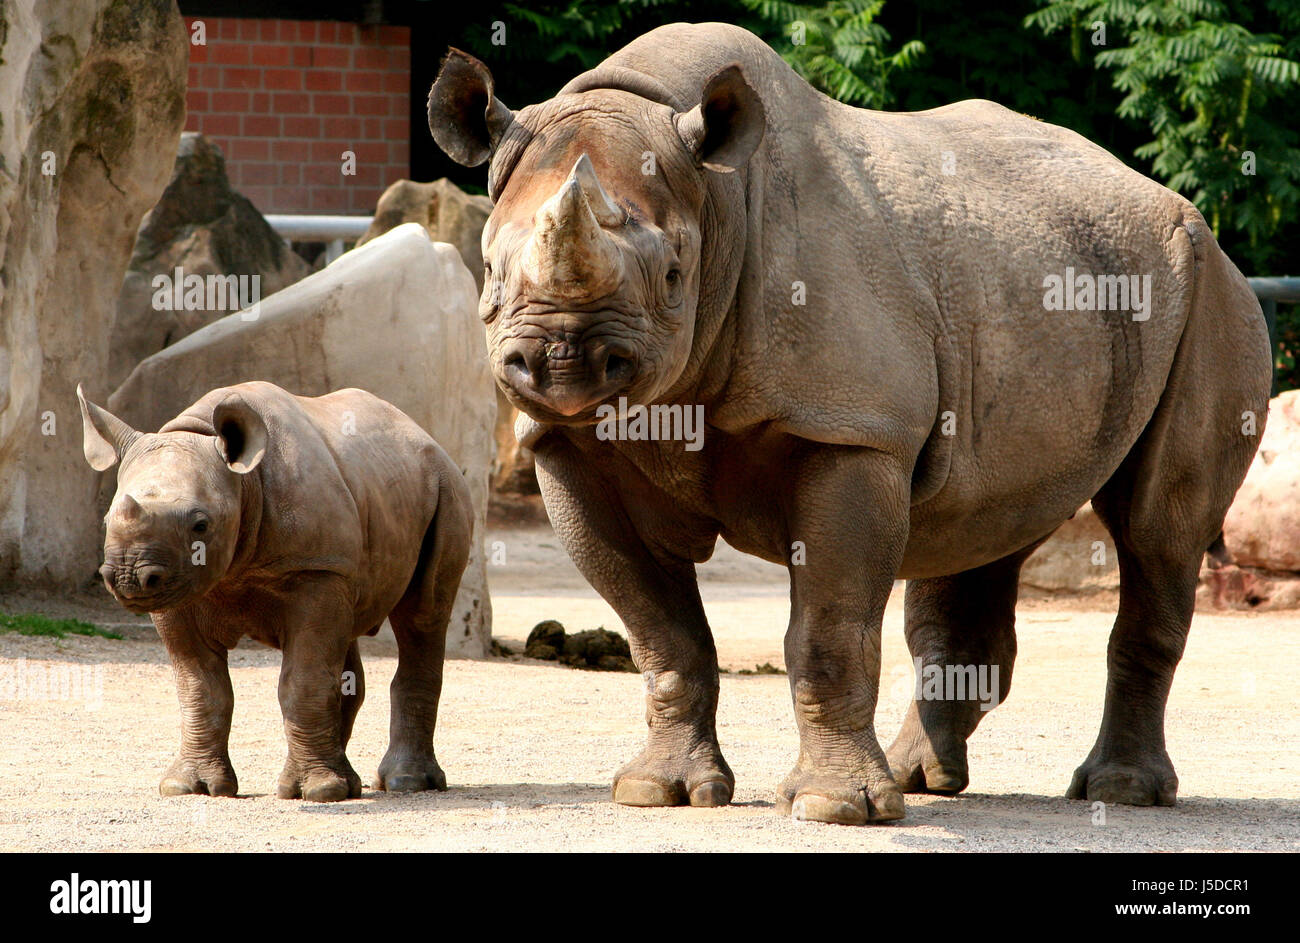 Säugetier wilde Afrika junge Tier schwere harte Nashorn Rhinoceros muttertier Stockfoto